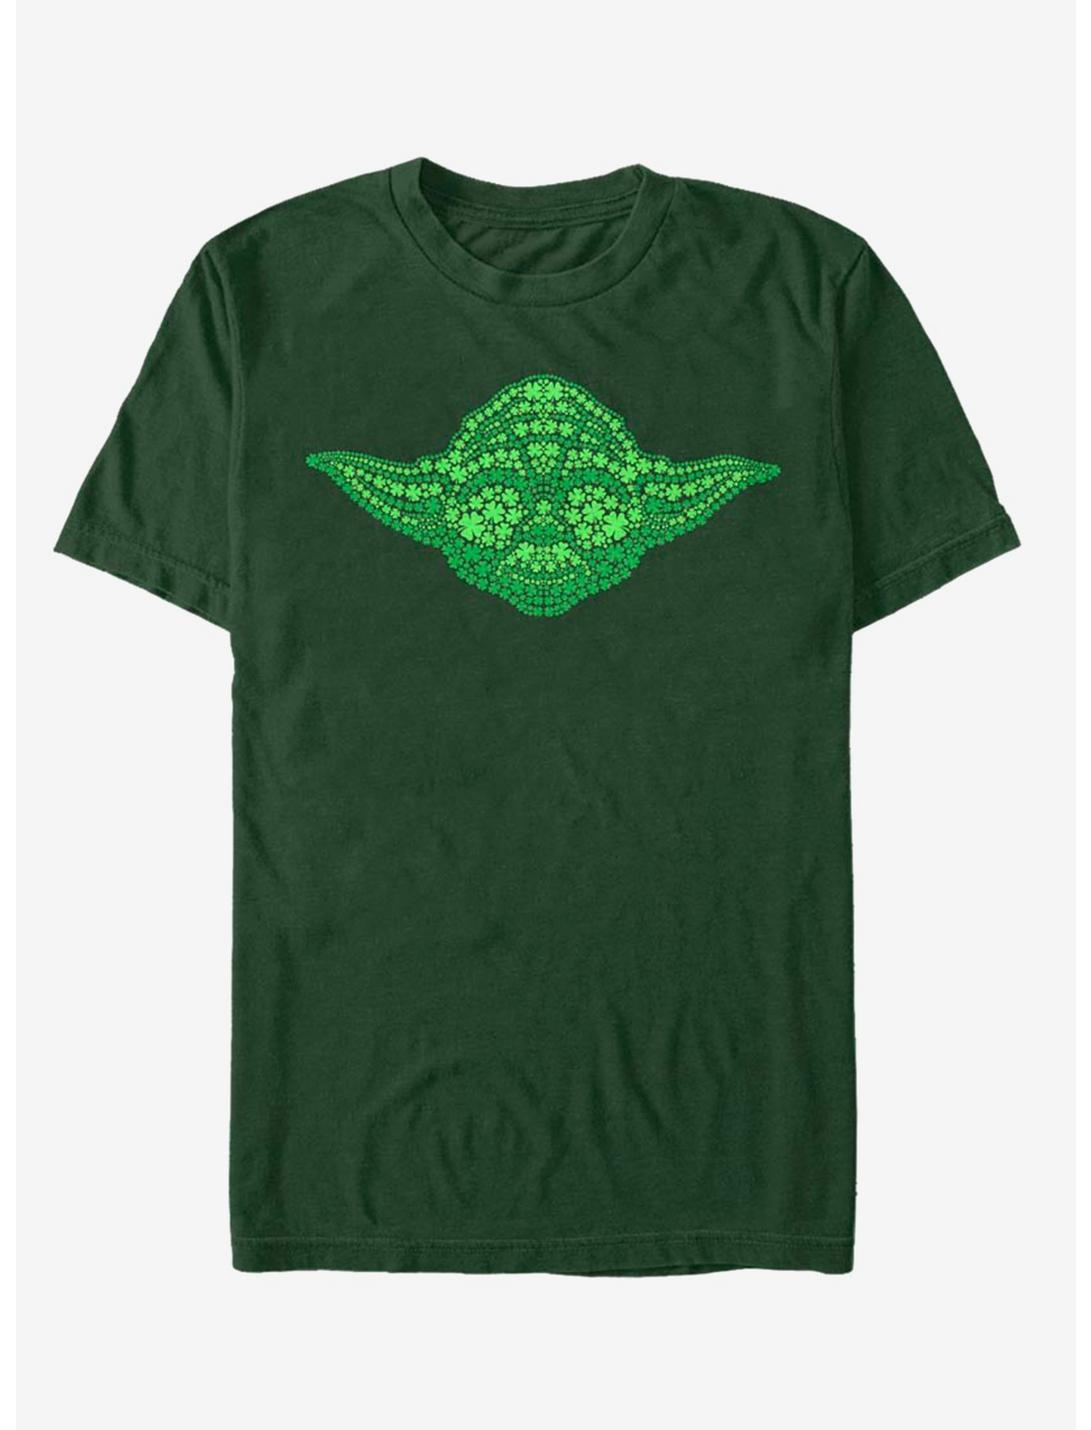 Star Wars Yoda Clovers T-Shirt, FOREST GRN, hi-res